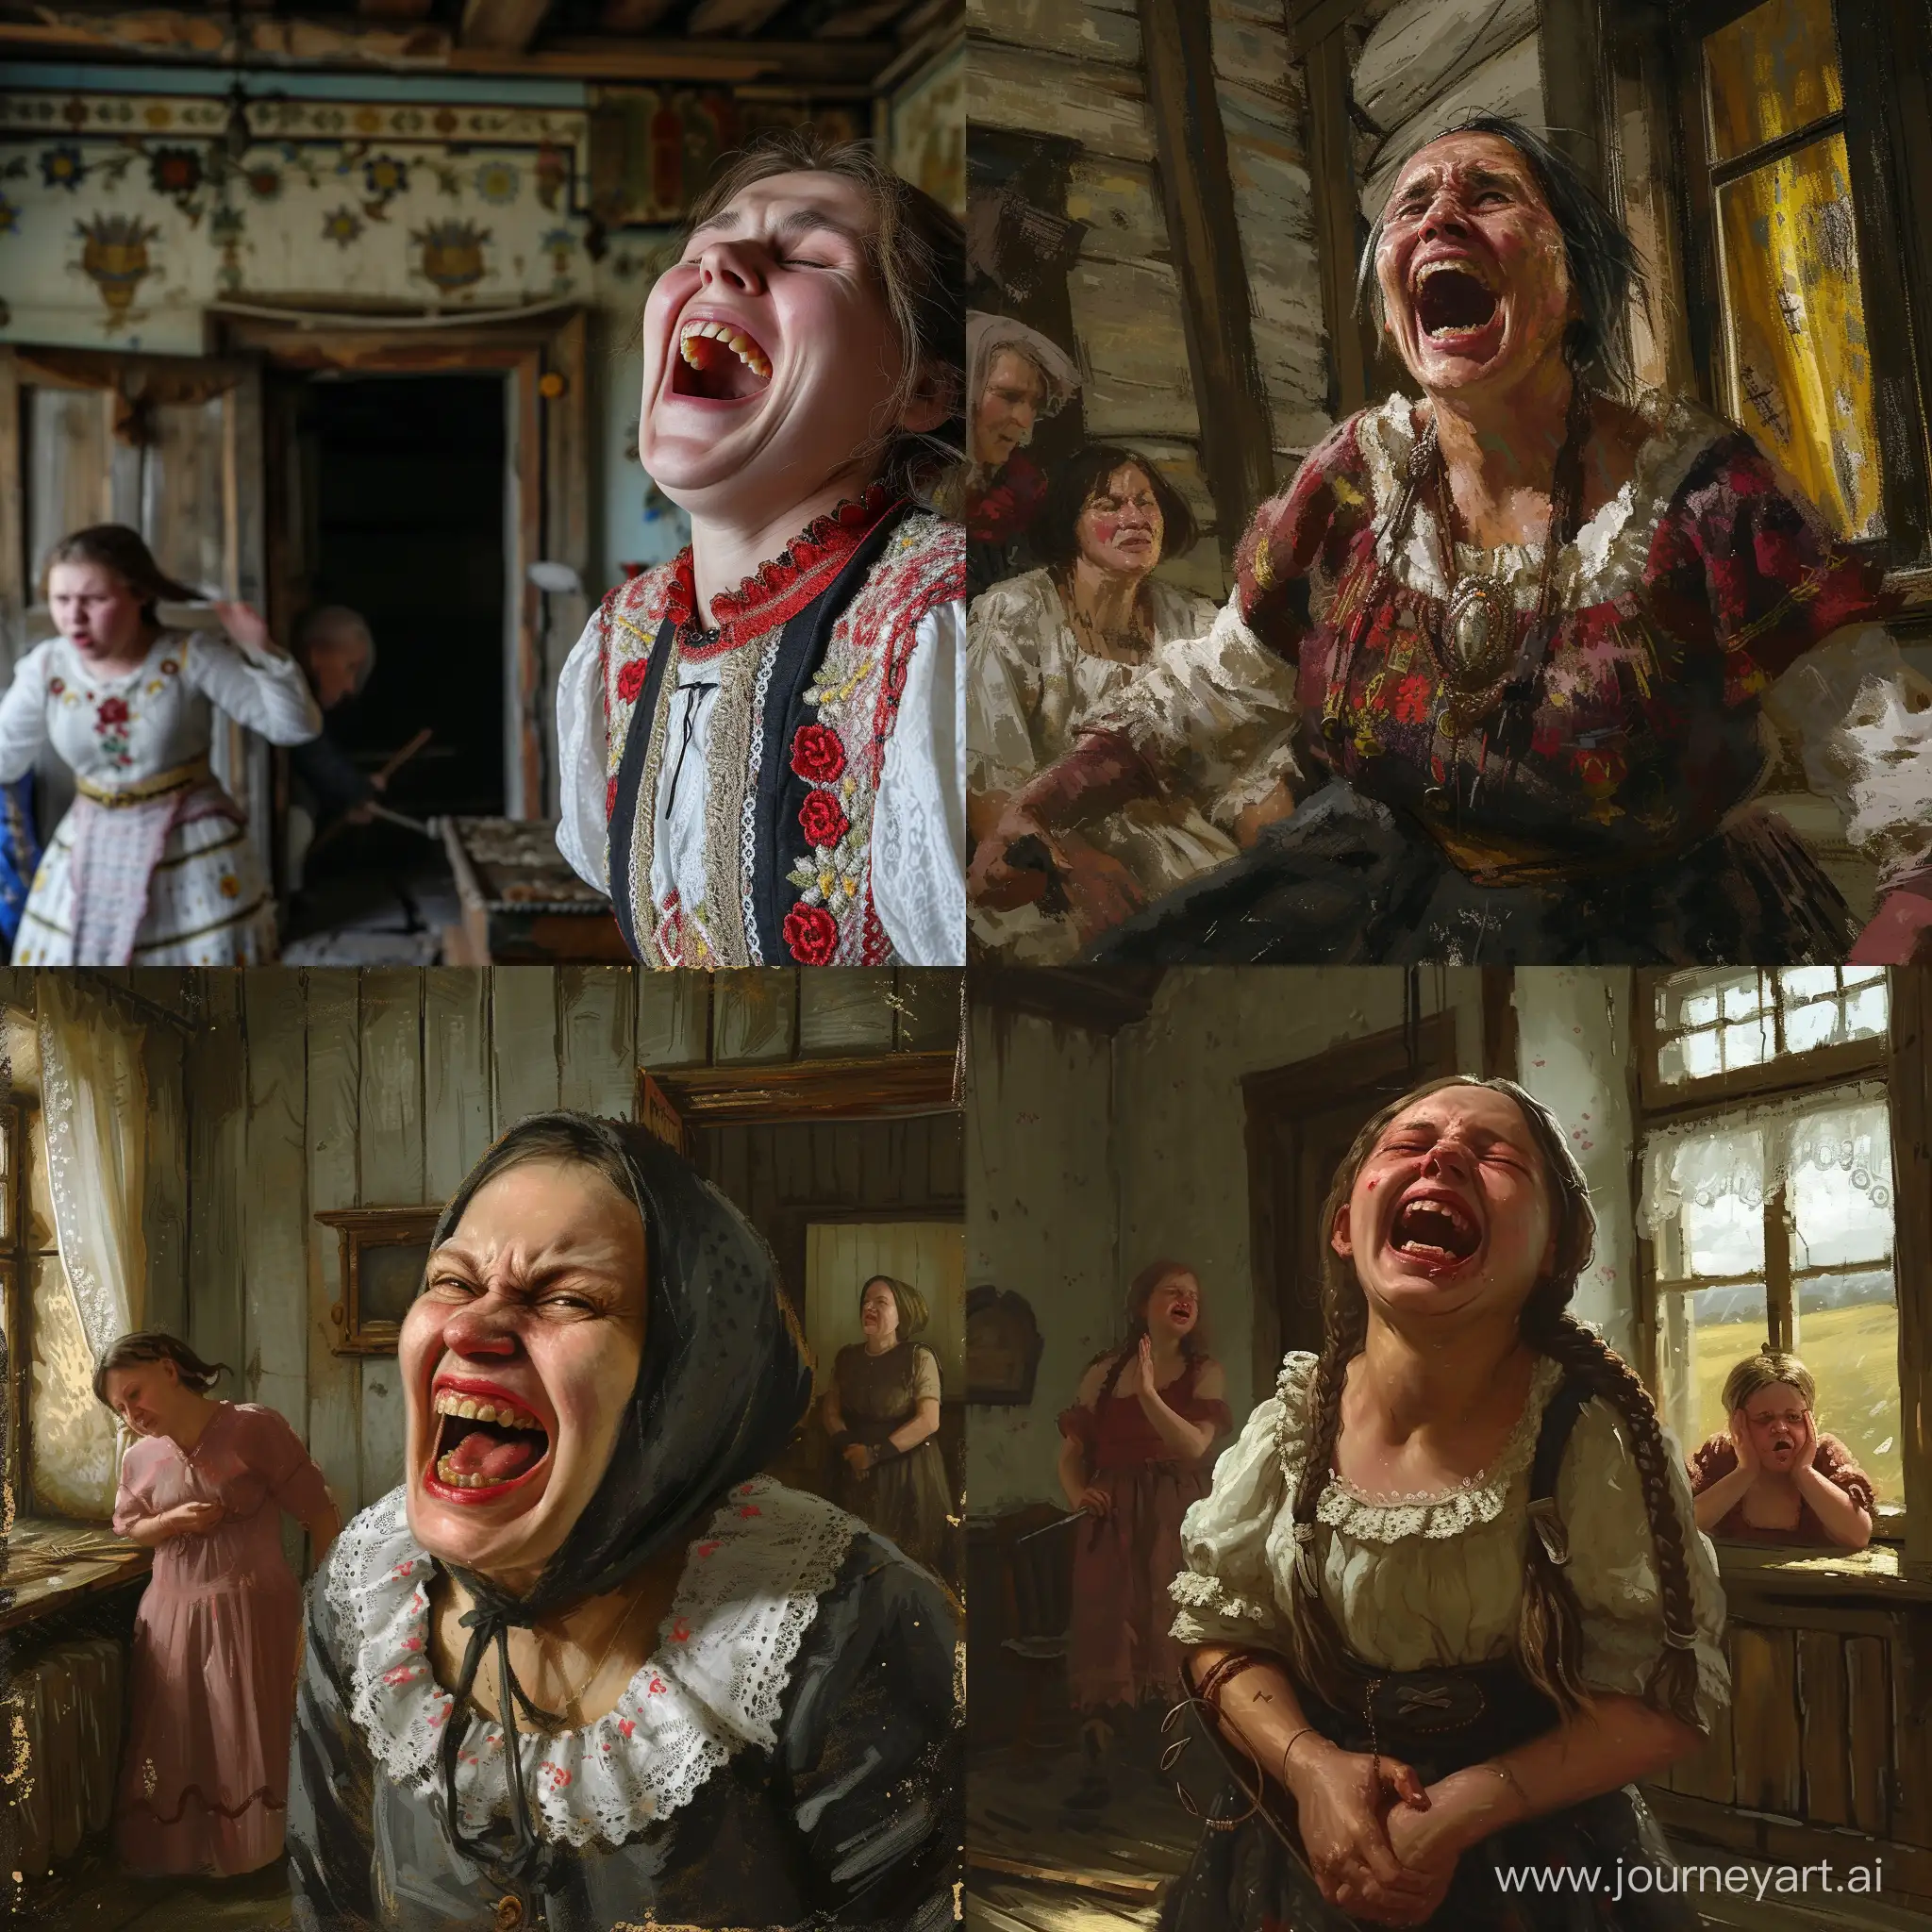 Joyful-Russian-Sister-Triumphs-as-Ukrainian-Sister-Weeps-in-Historic-Home